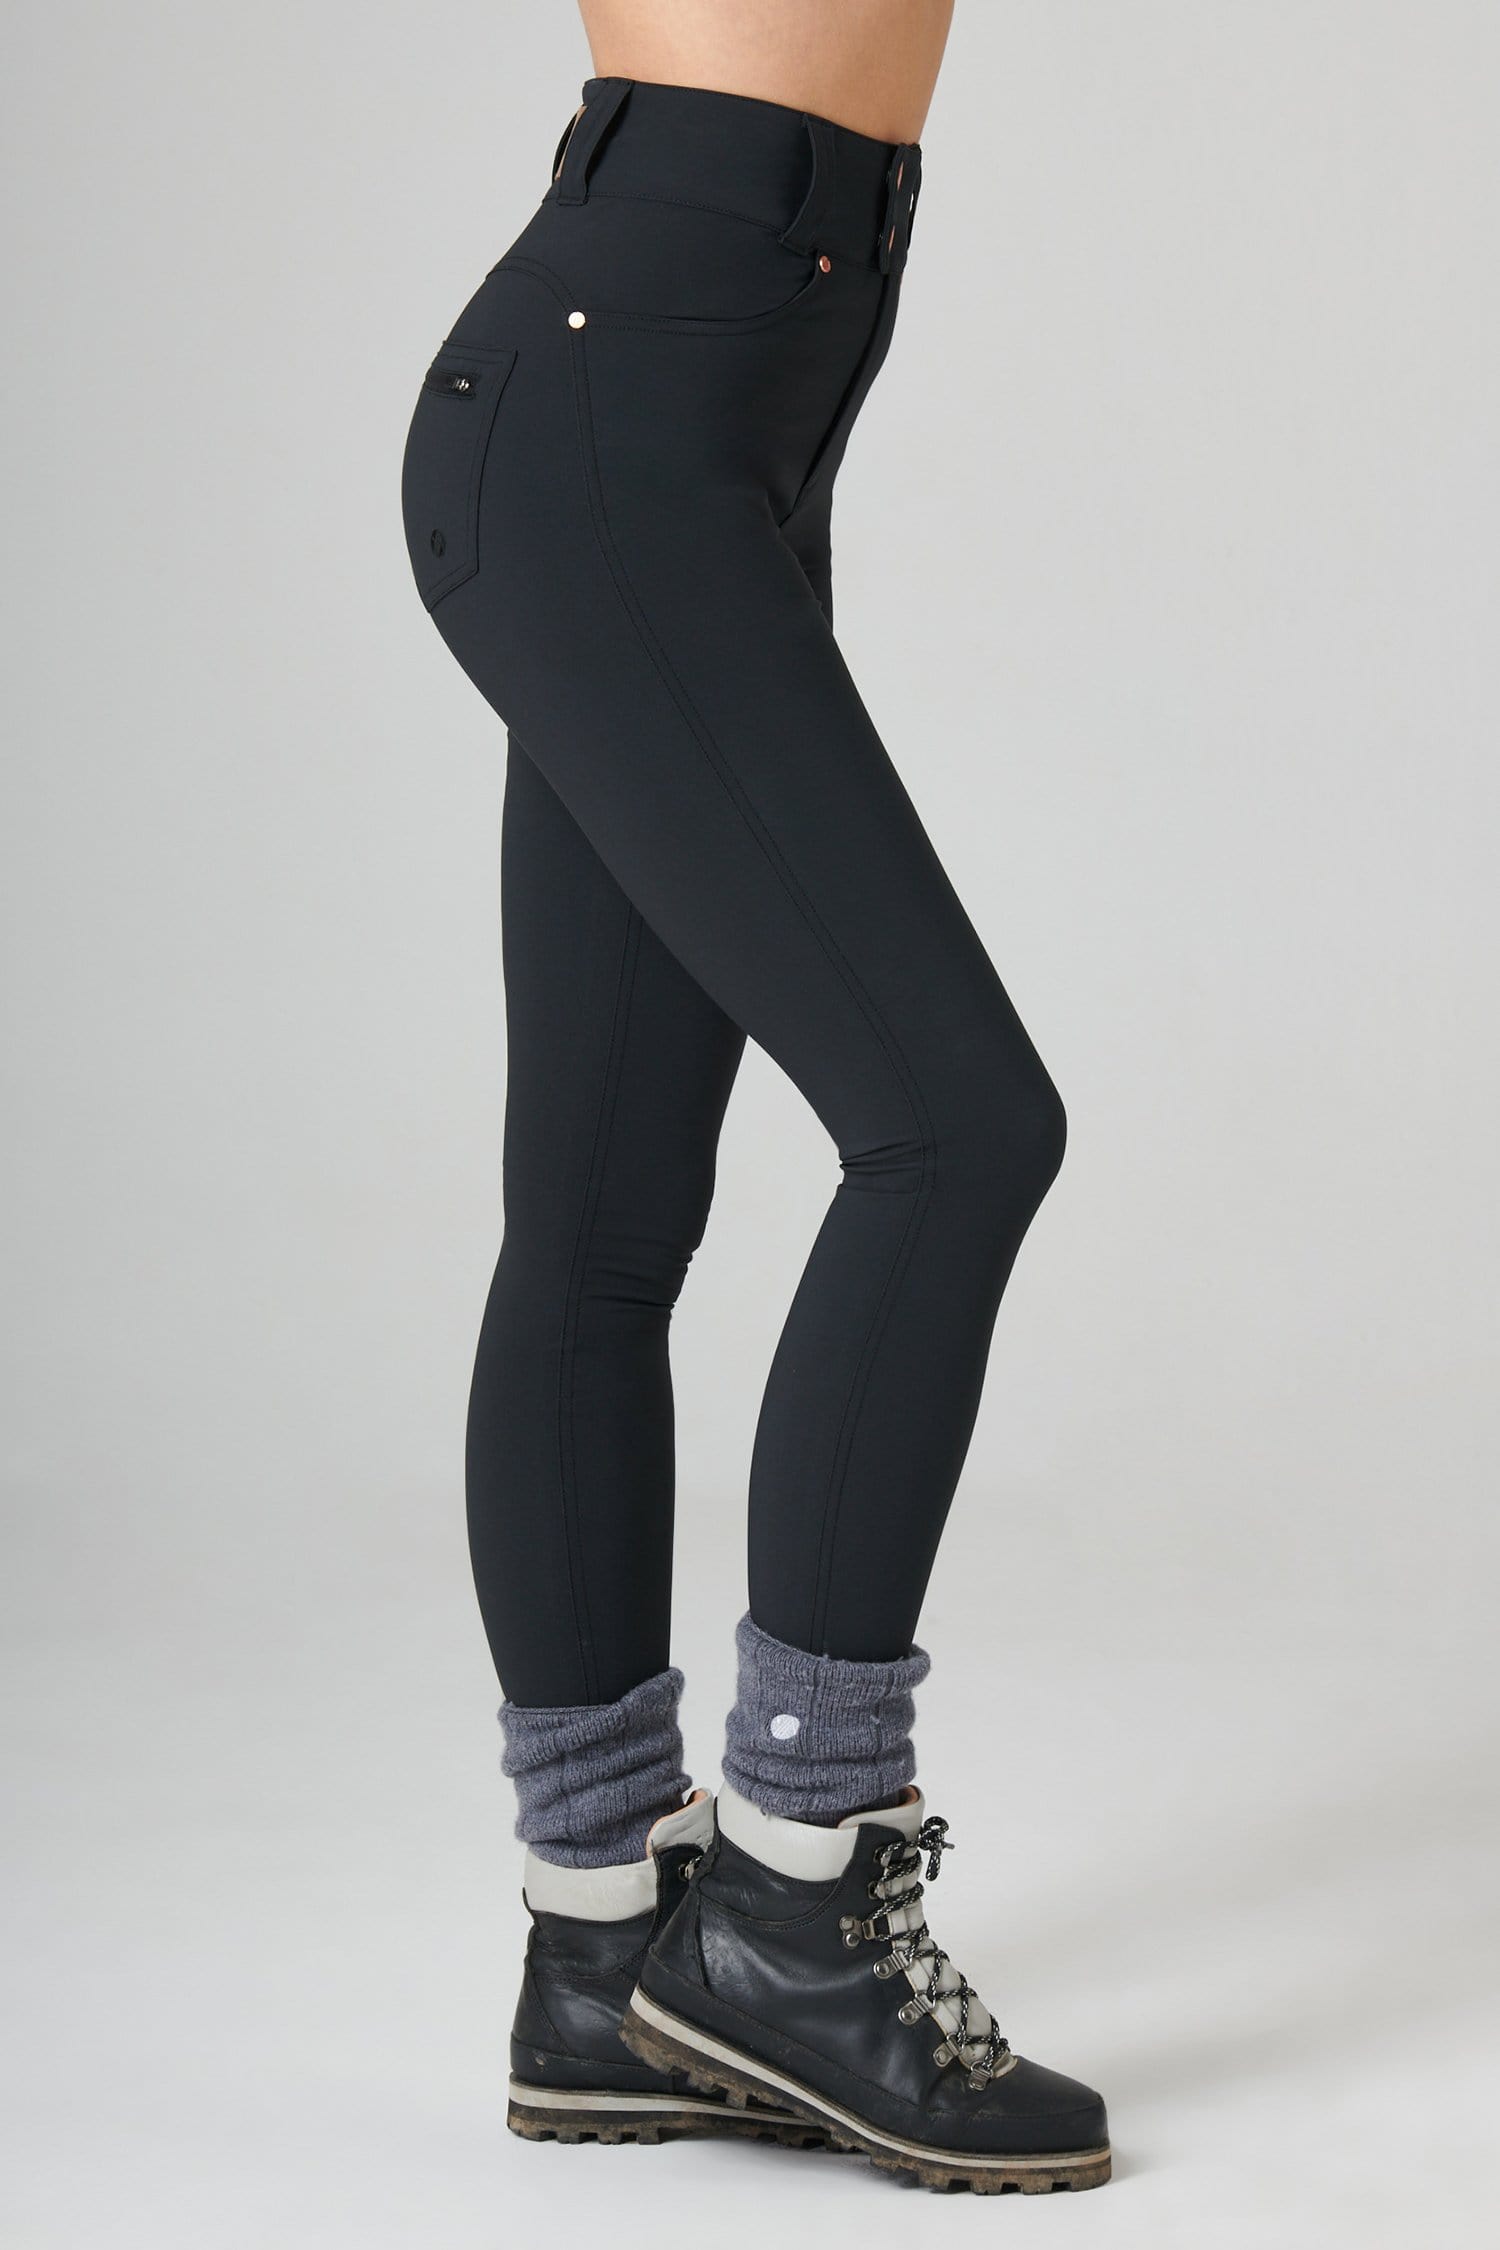 Women's Walking Trousers & Tights. Nike UK